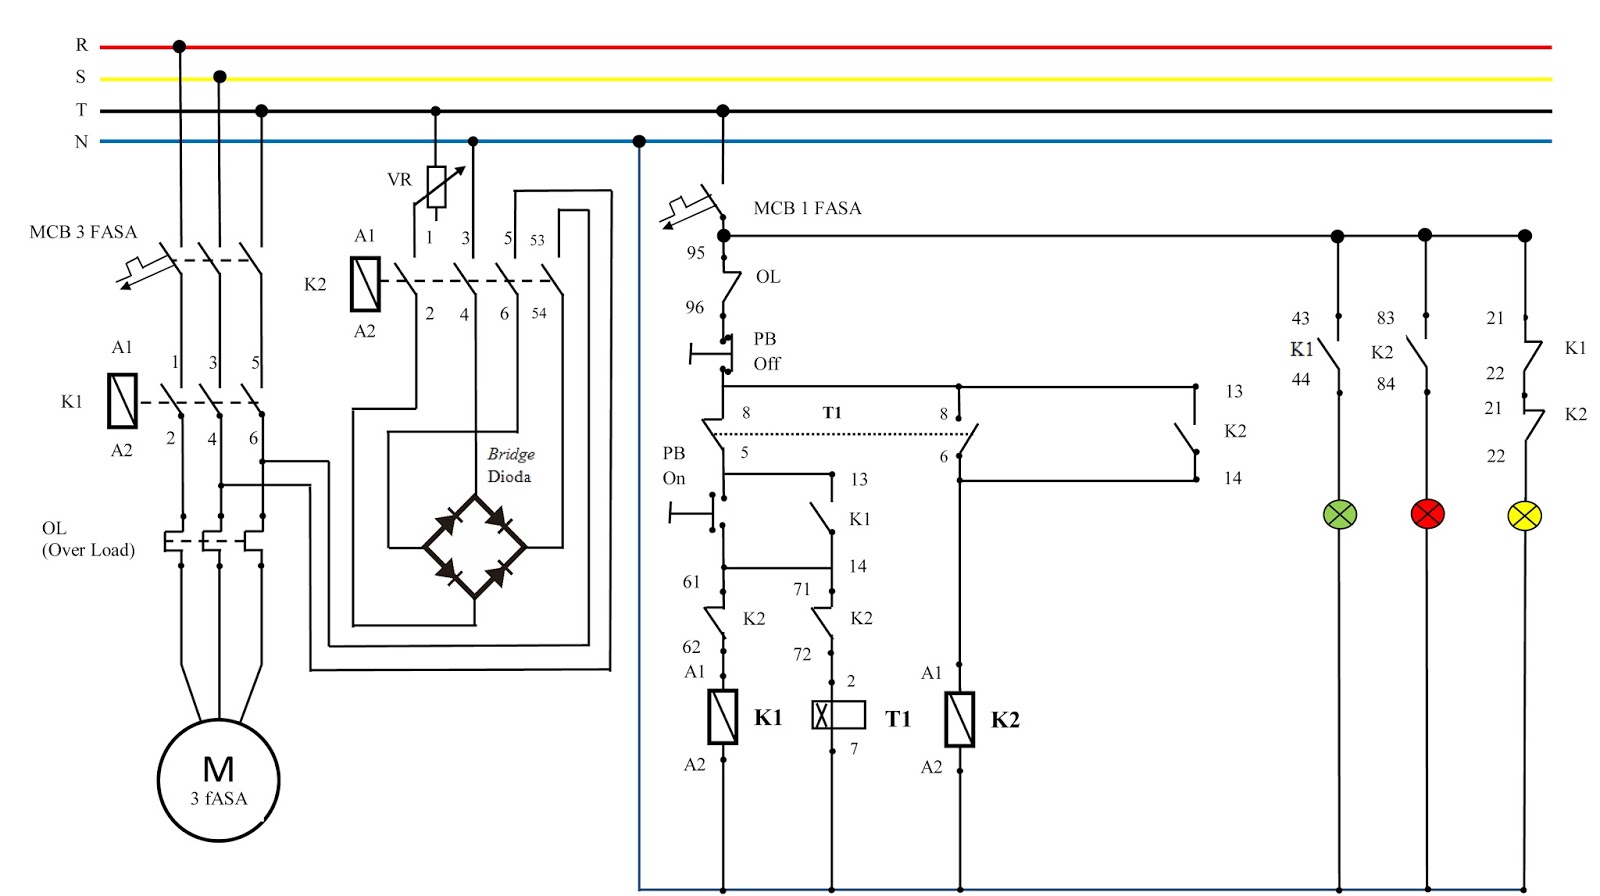 [DIAGRAM] Wiring Diagram Motor Listrik 3 Fasa - MYDIAGRAM.ONLINE